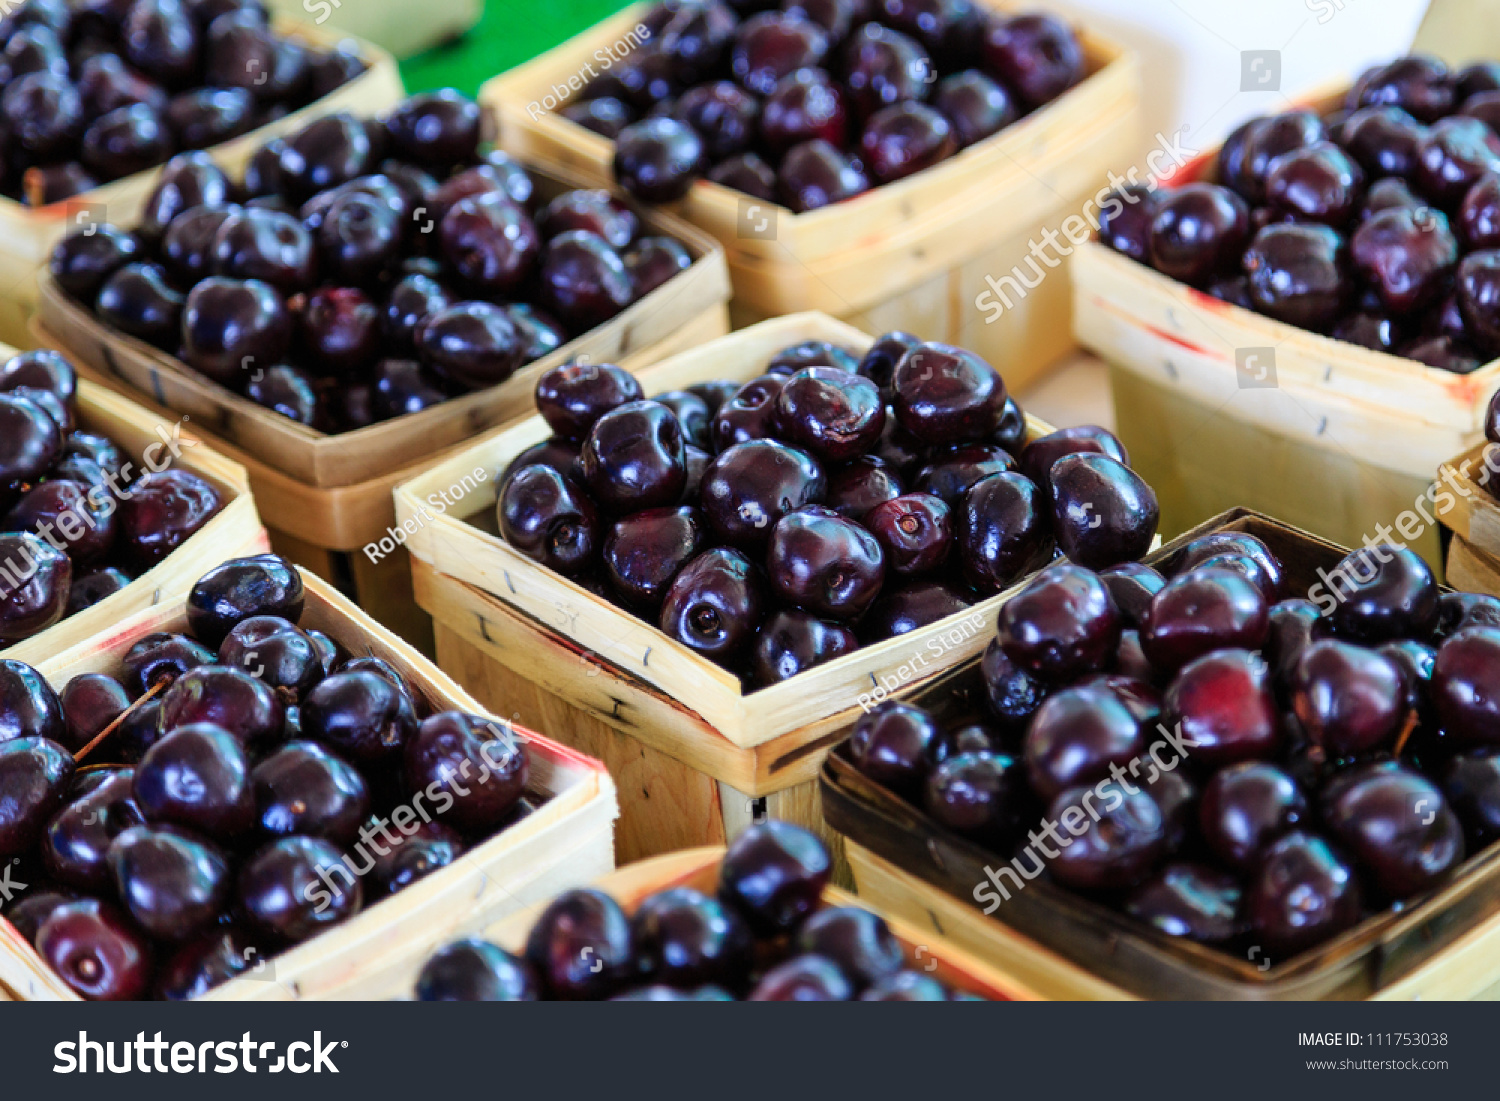 Cherries in wooden baskets at market #111753038